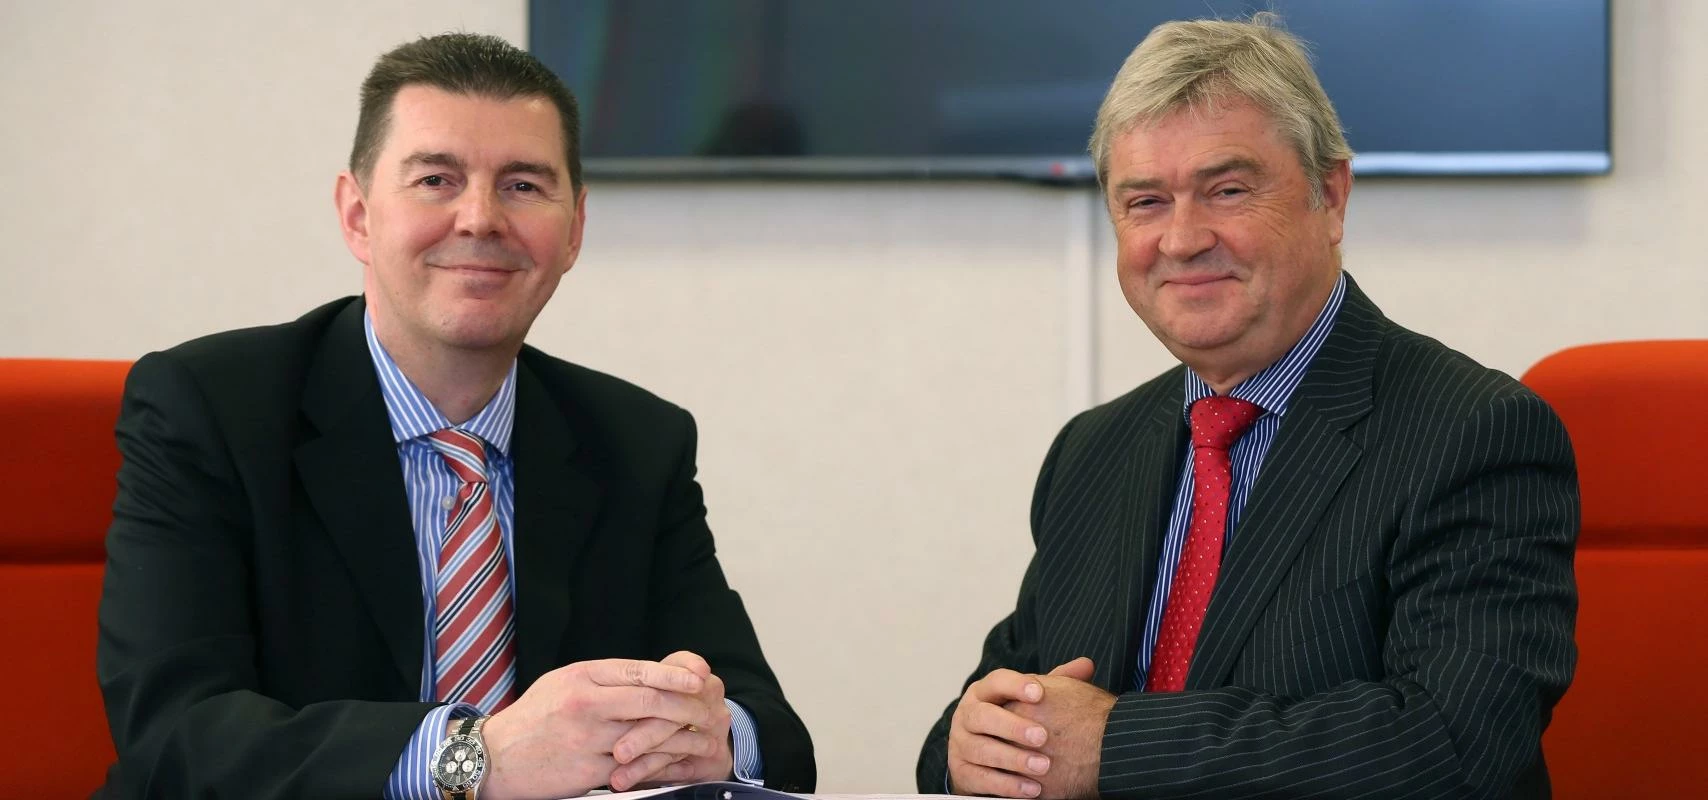 New Tax Partner David Waddington with Director of Haines Watts Liverpool Des Veney